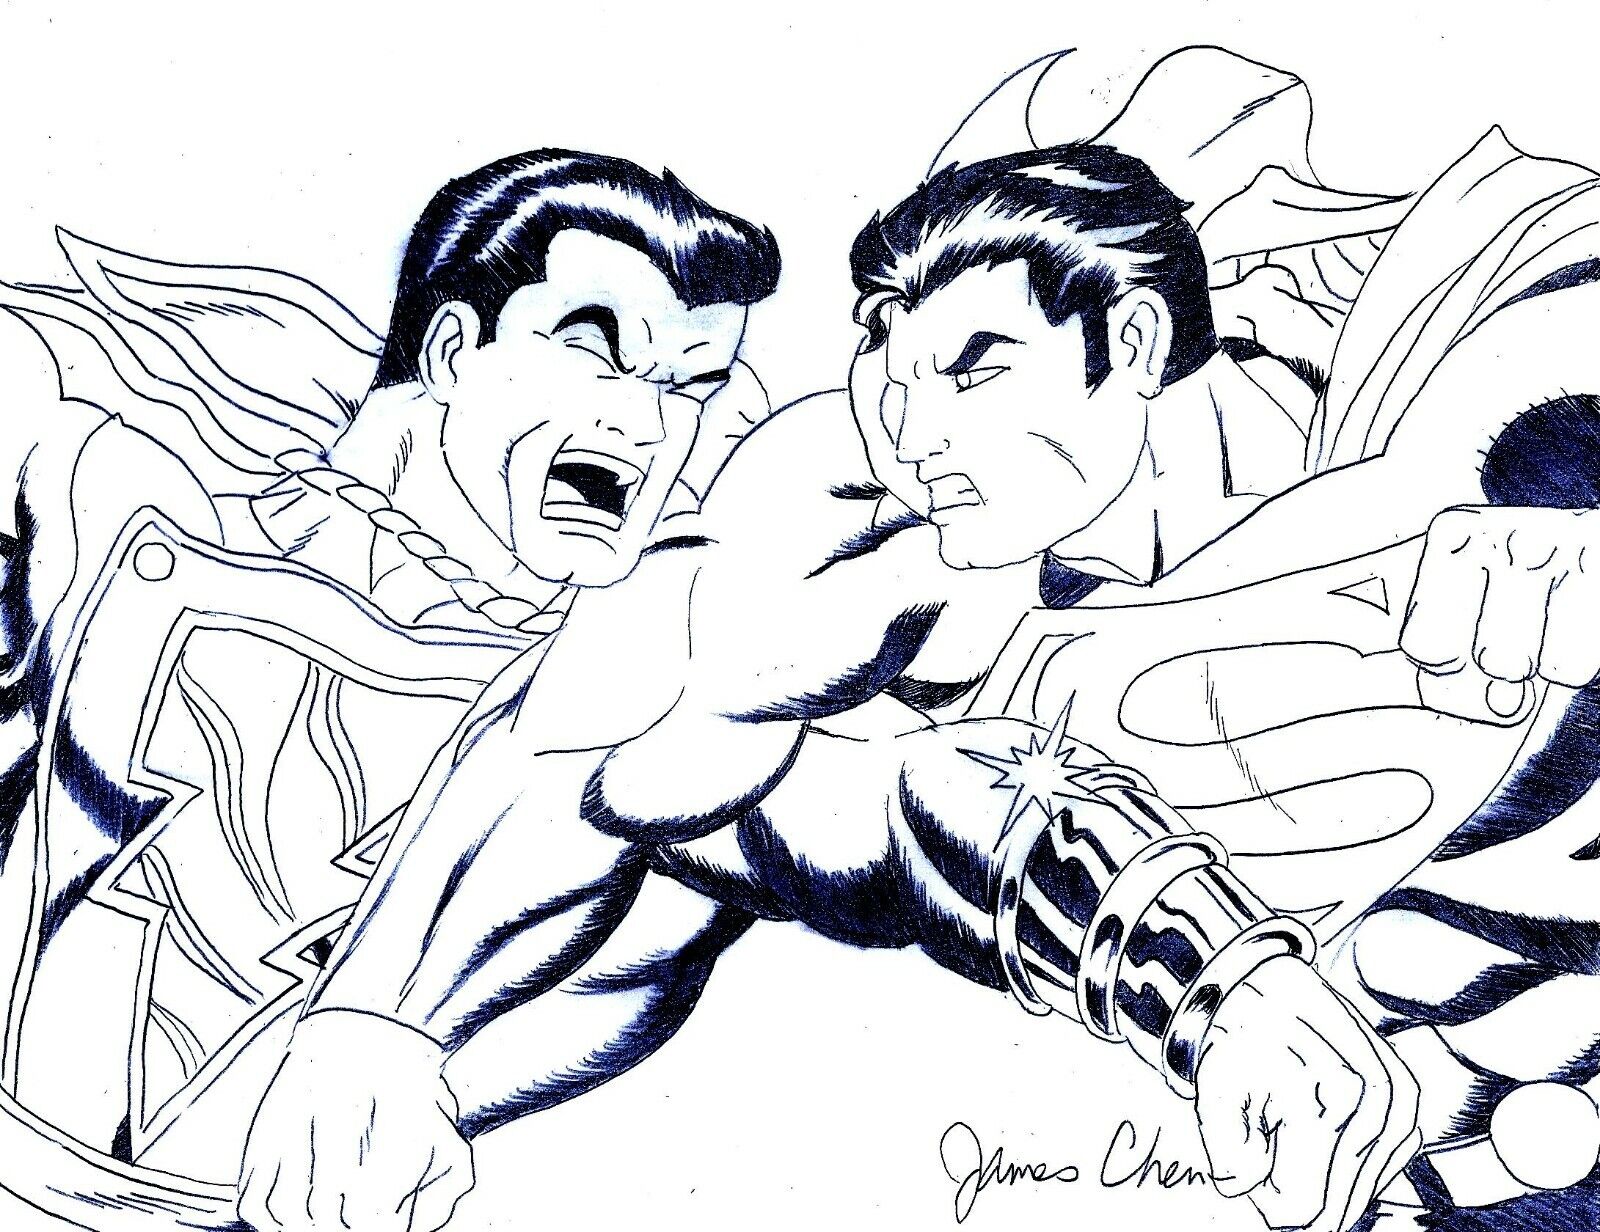 Superman vs shazam captain marvel original ic art on card stock